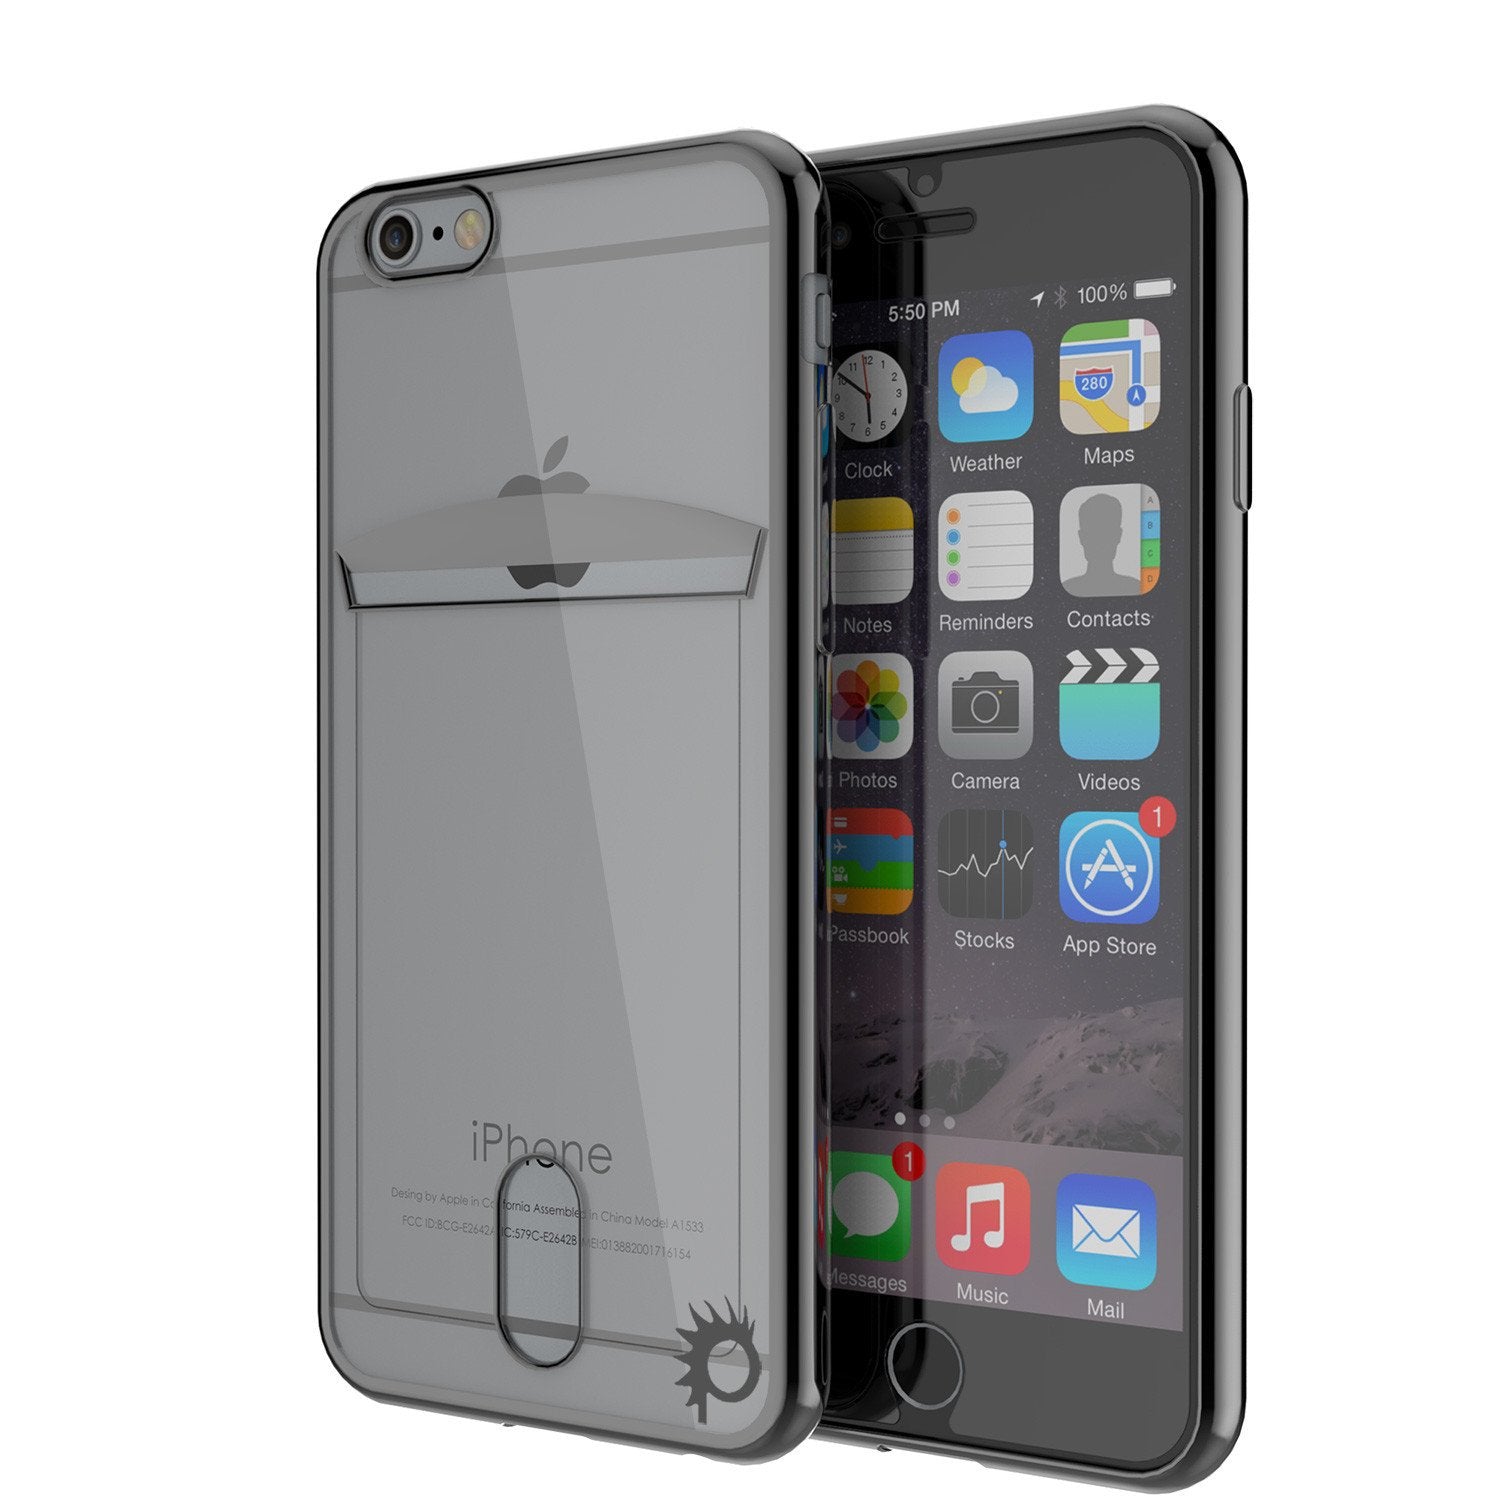 iPhone 6s+ Plus/6+ Plus, PUNKCASE® LUCID Black Card Slot Series